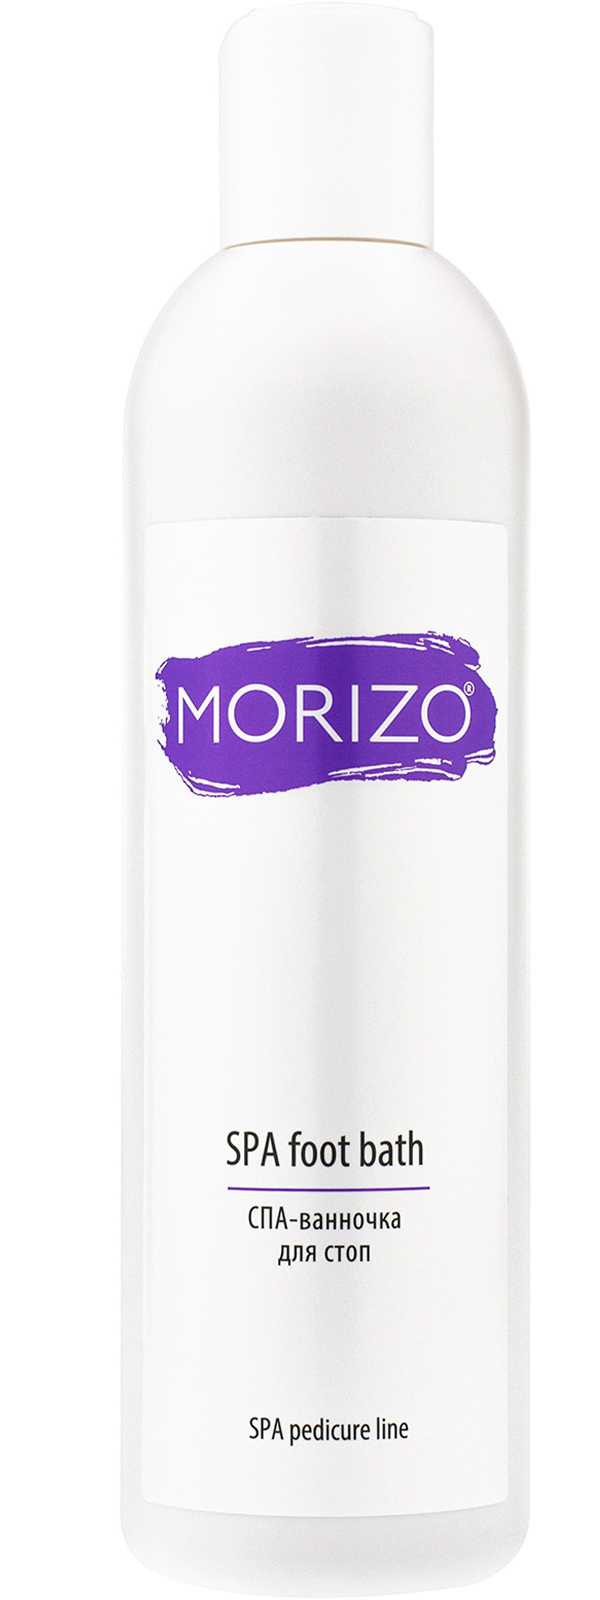 Morizo СПА - ванночка для стоп, 300 мл (Morizo, Pedicure line)